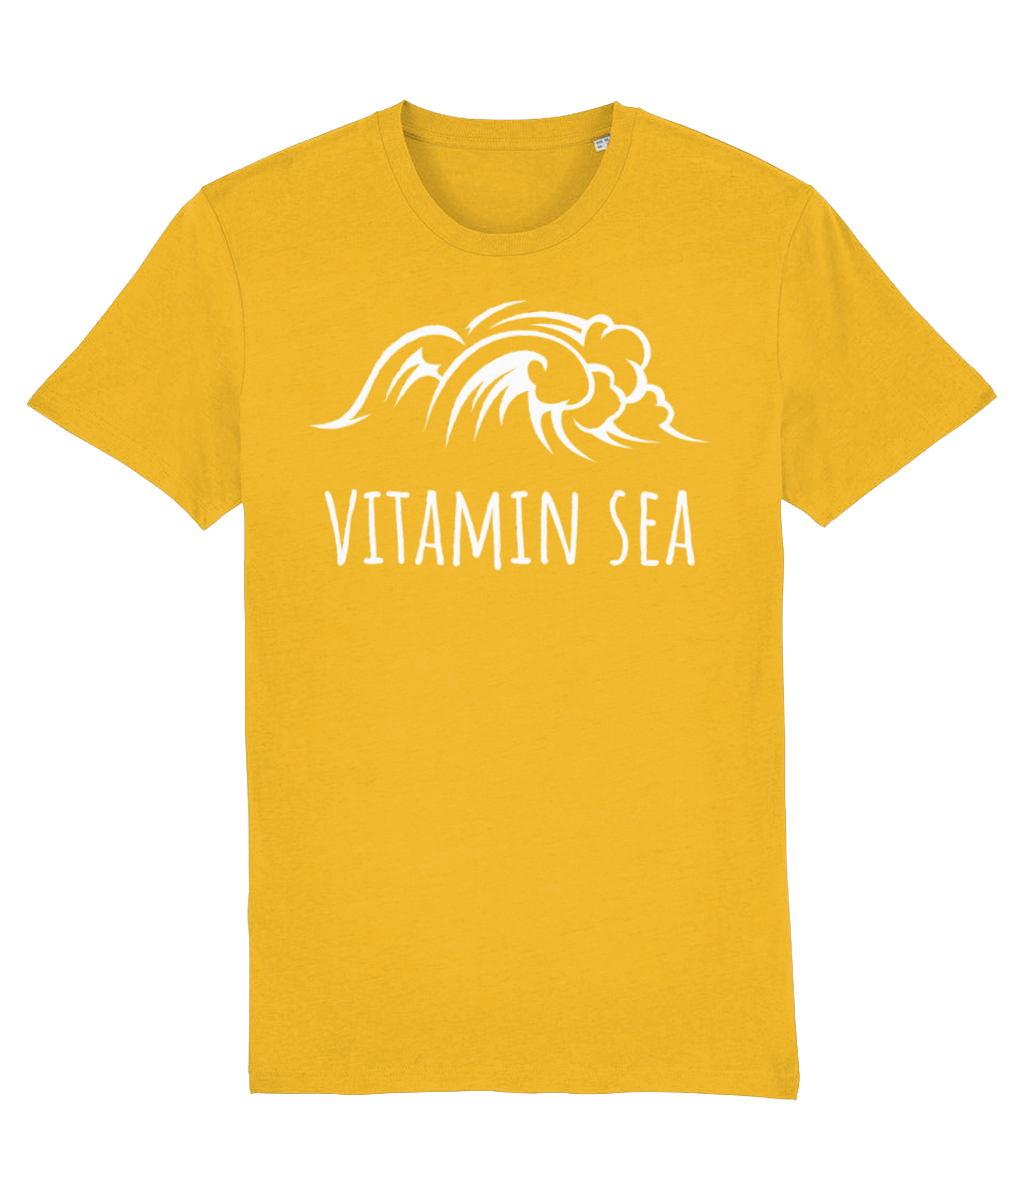 Vitamin Sea Unisex Organic Cotton T-shirt